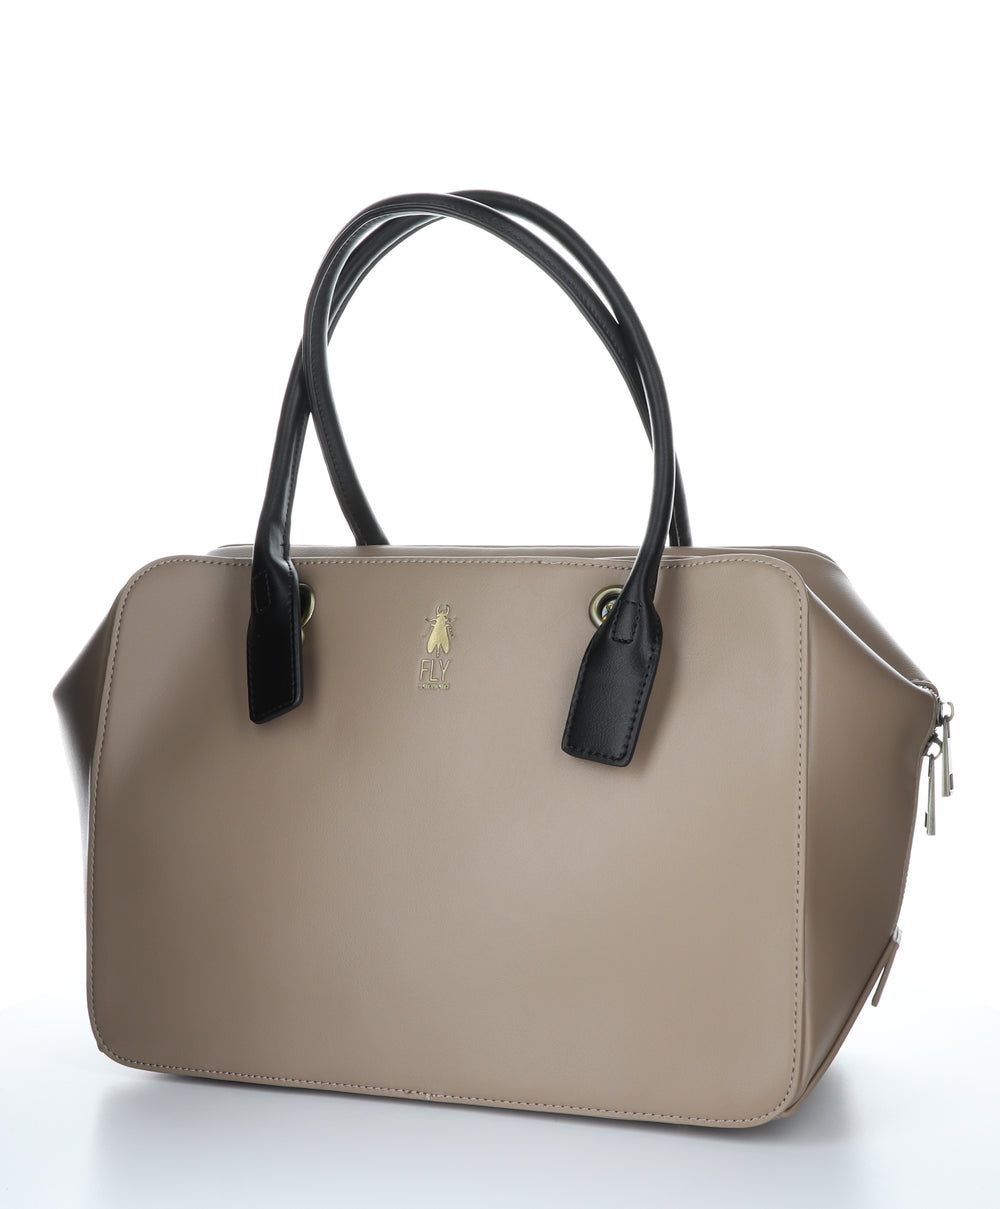 AVES698FLY BEIGE Handbag Bags|AVES698FLY Sac à Main in Beige